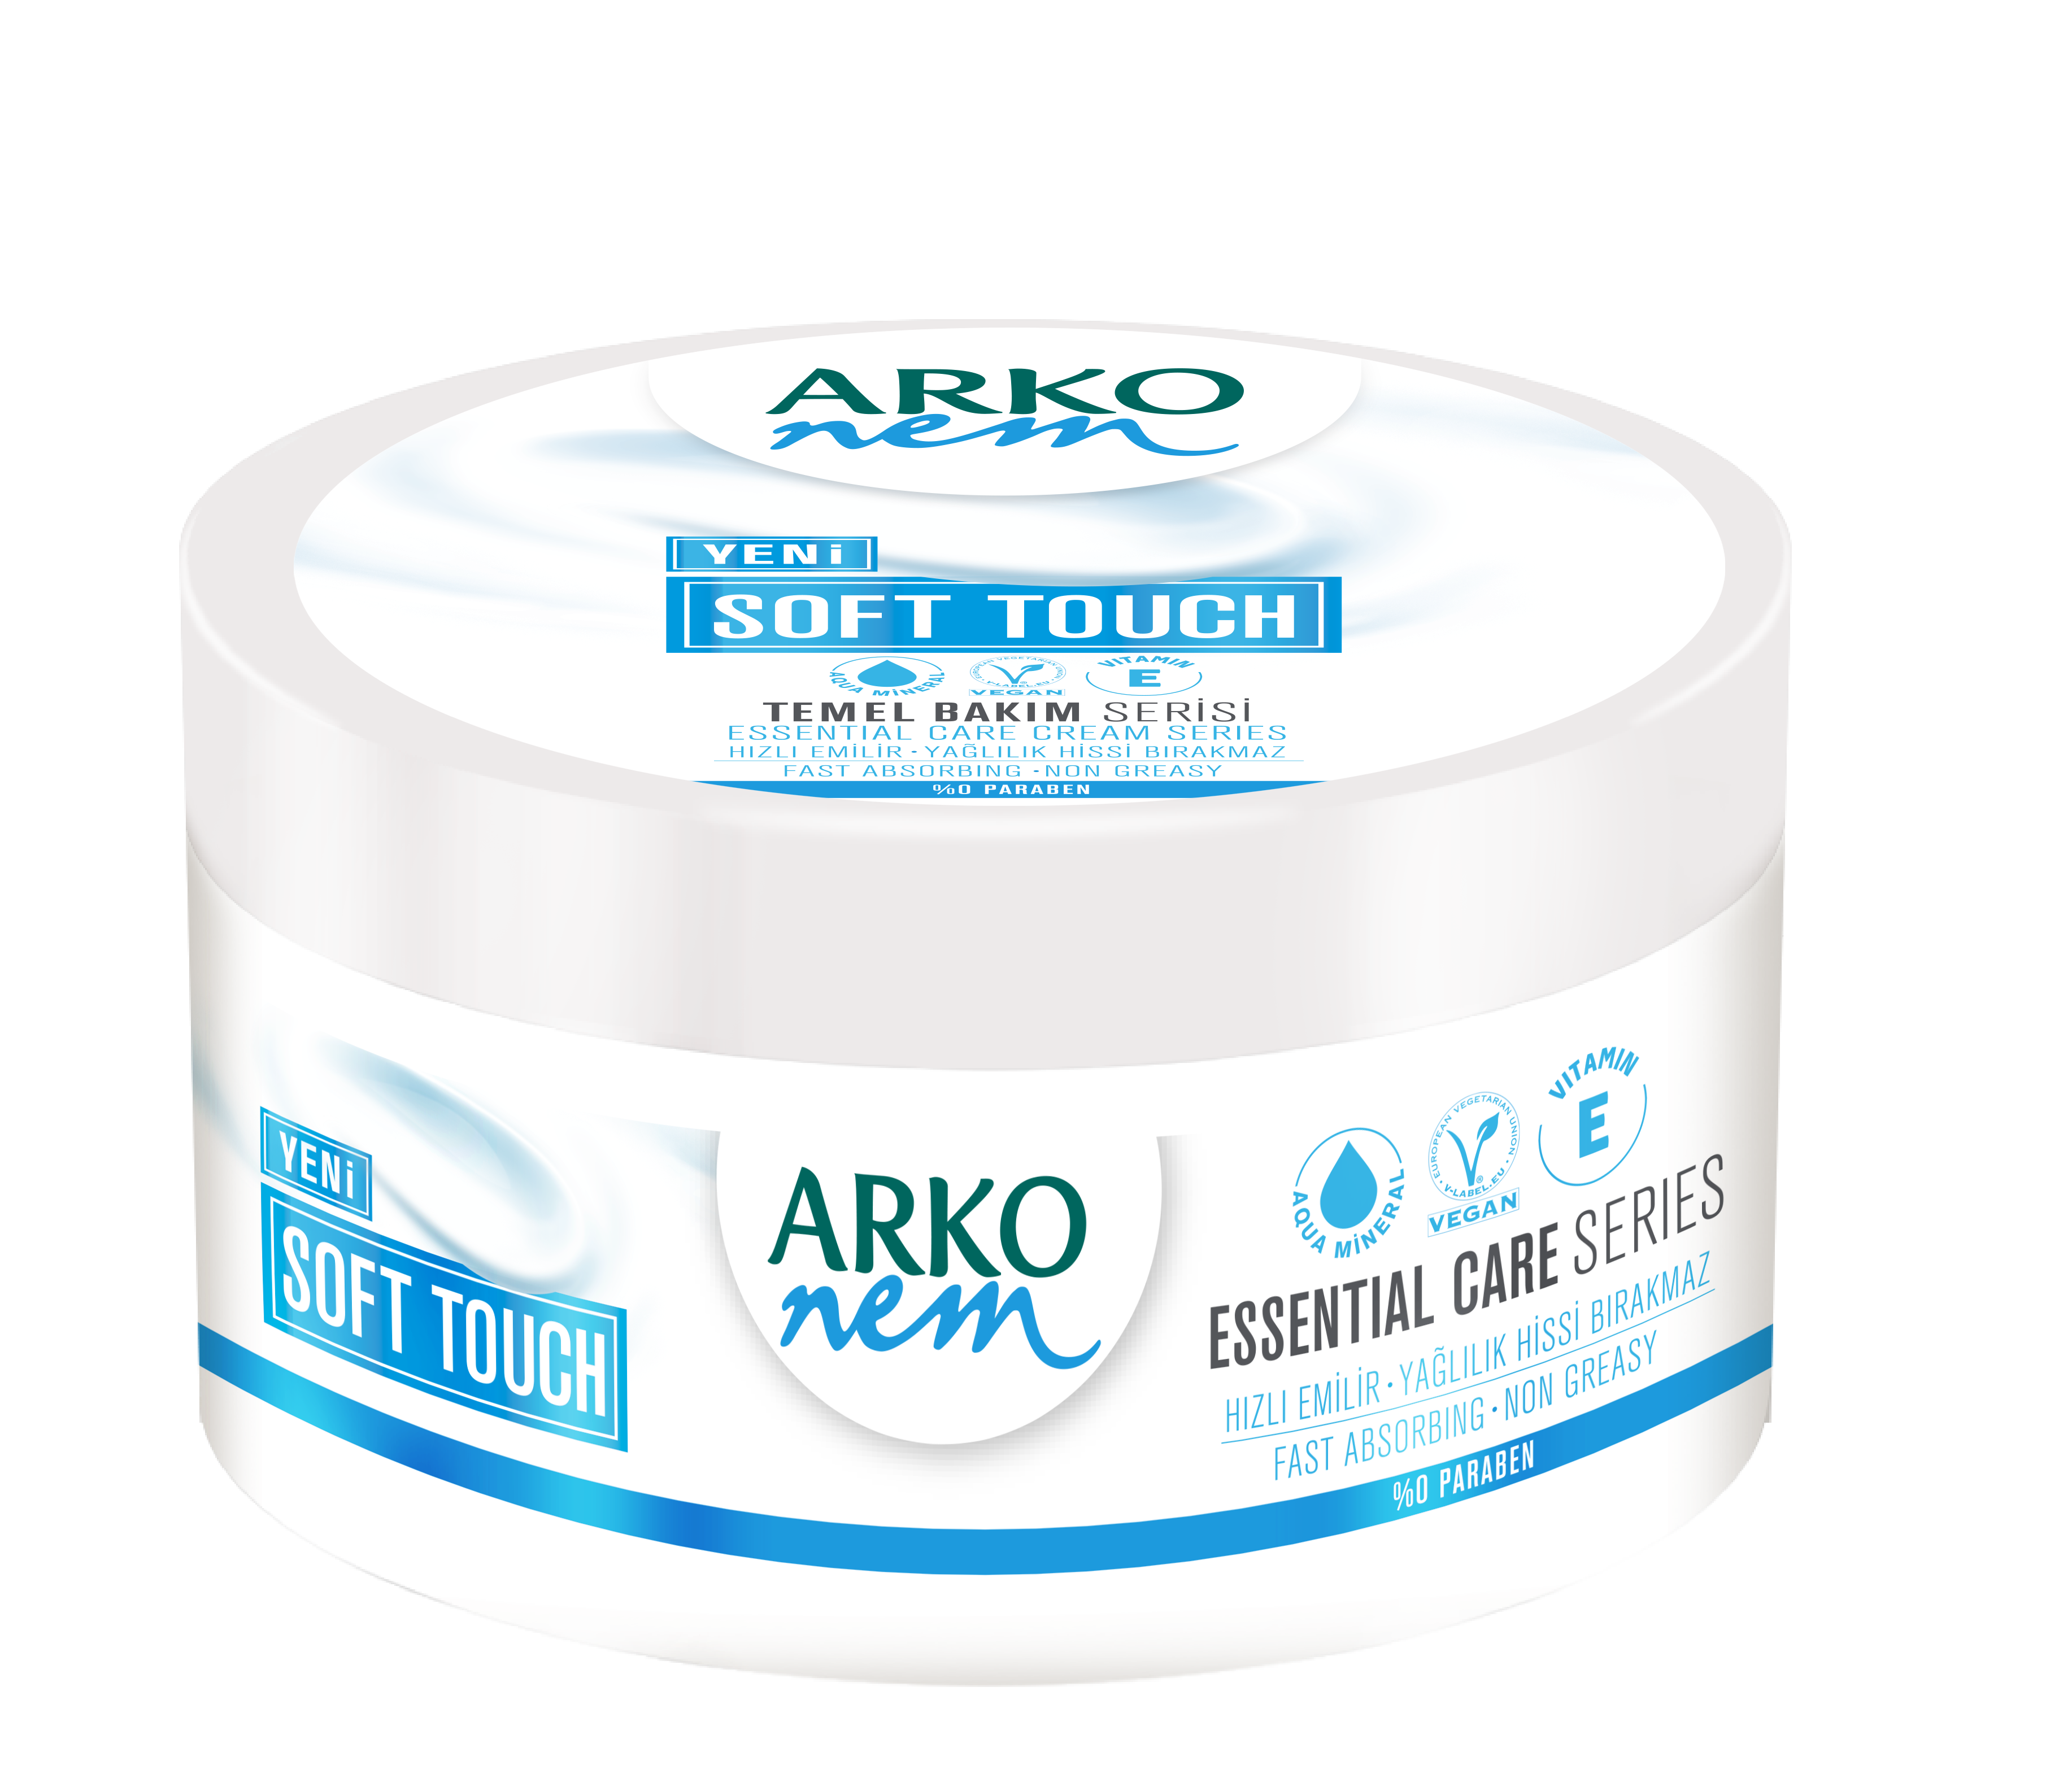 ARKO Soft touch krema za normalnu kožu 250ml